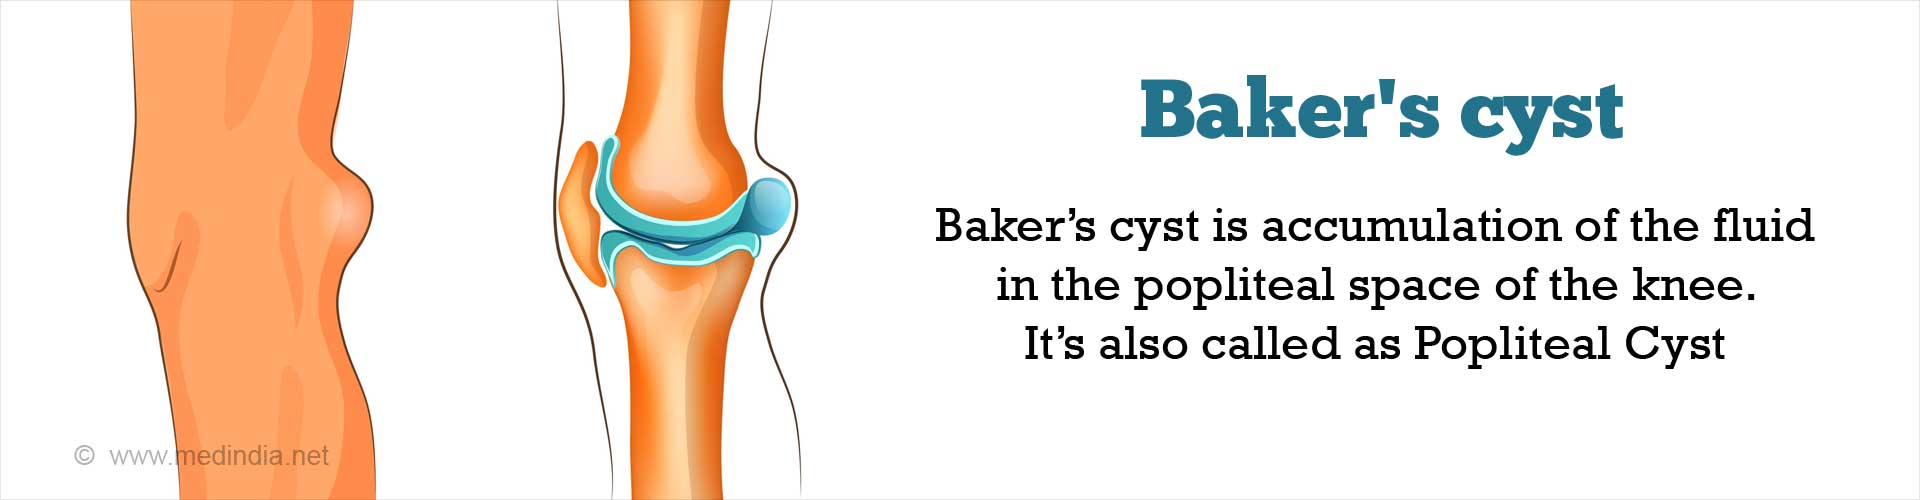 Baker's Cyst - Causes, Symptoms, Diagnosis, Treatment